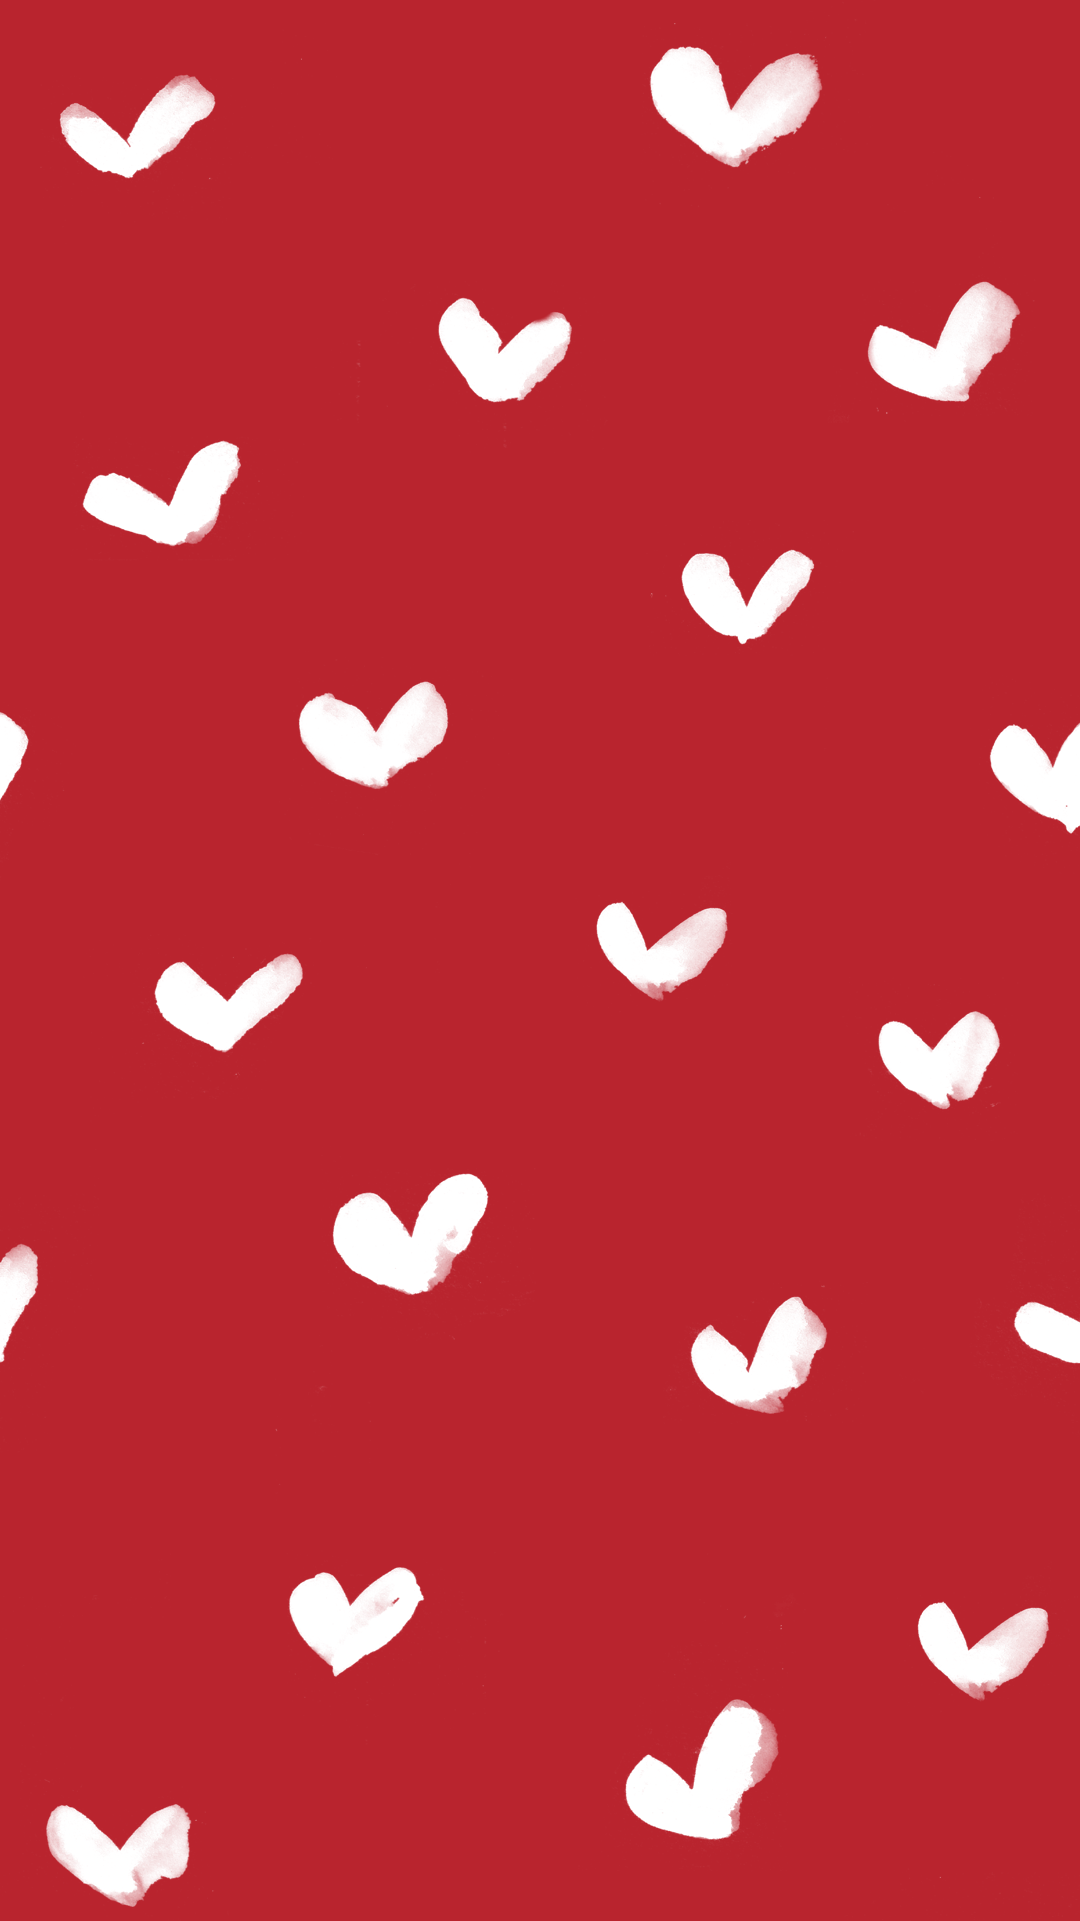 Free Heart Phone Wallpaper Downloads Hearts Red. Fondos de pantalla de iphone, Ideas de fondos de pantalla, iPhone fondos de pantalla